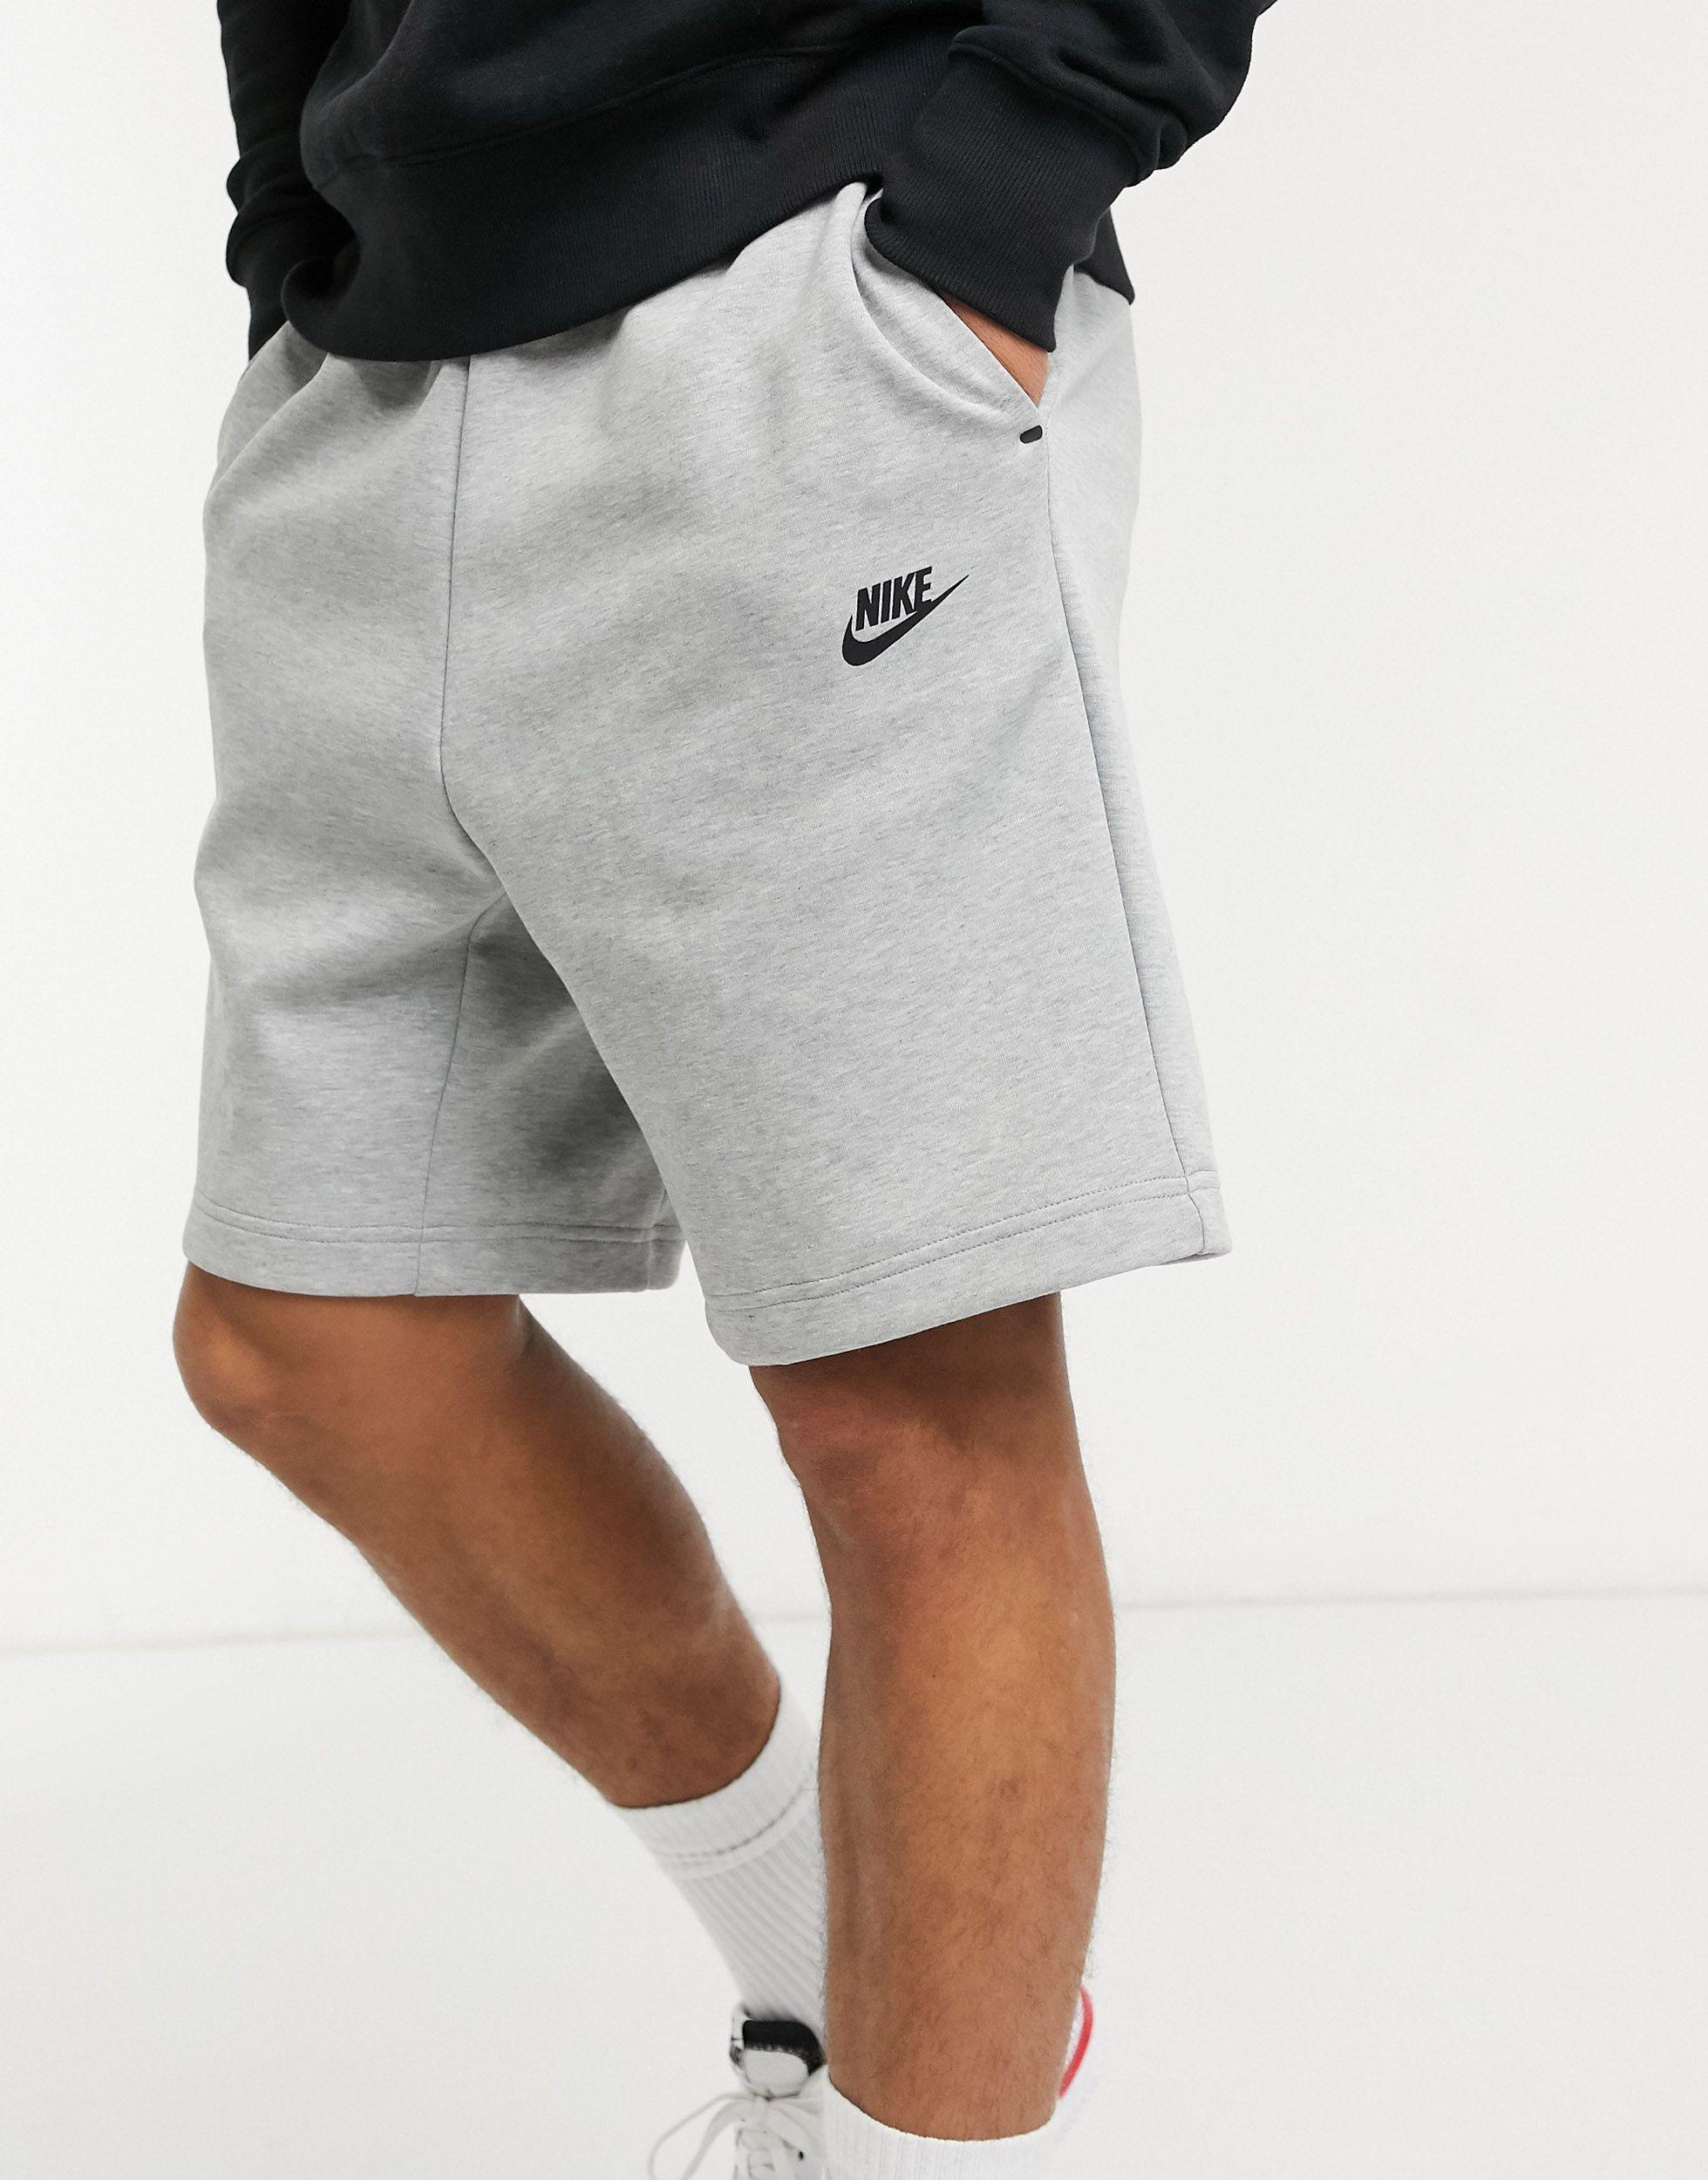 Nike Sportswear Tech Fleece Shorts in Dark Grey Heather | Black (Grey) for  Men - Save 39% | Lyst UK